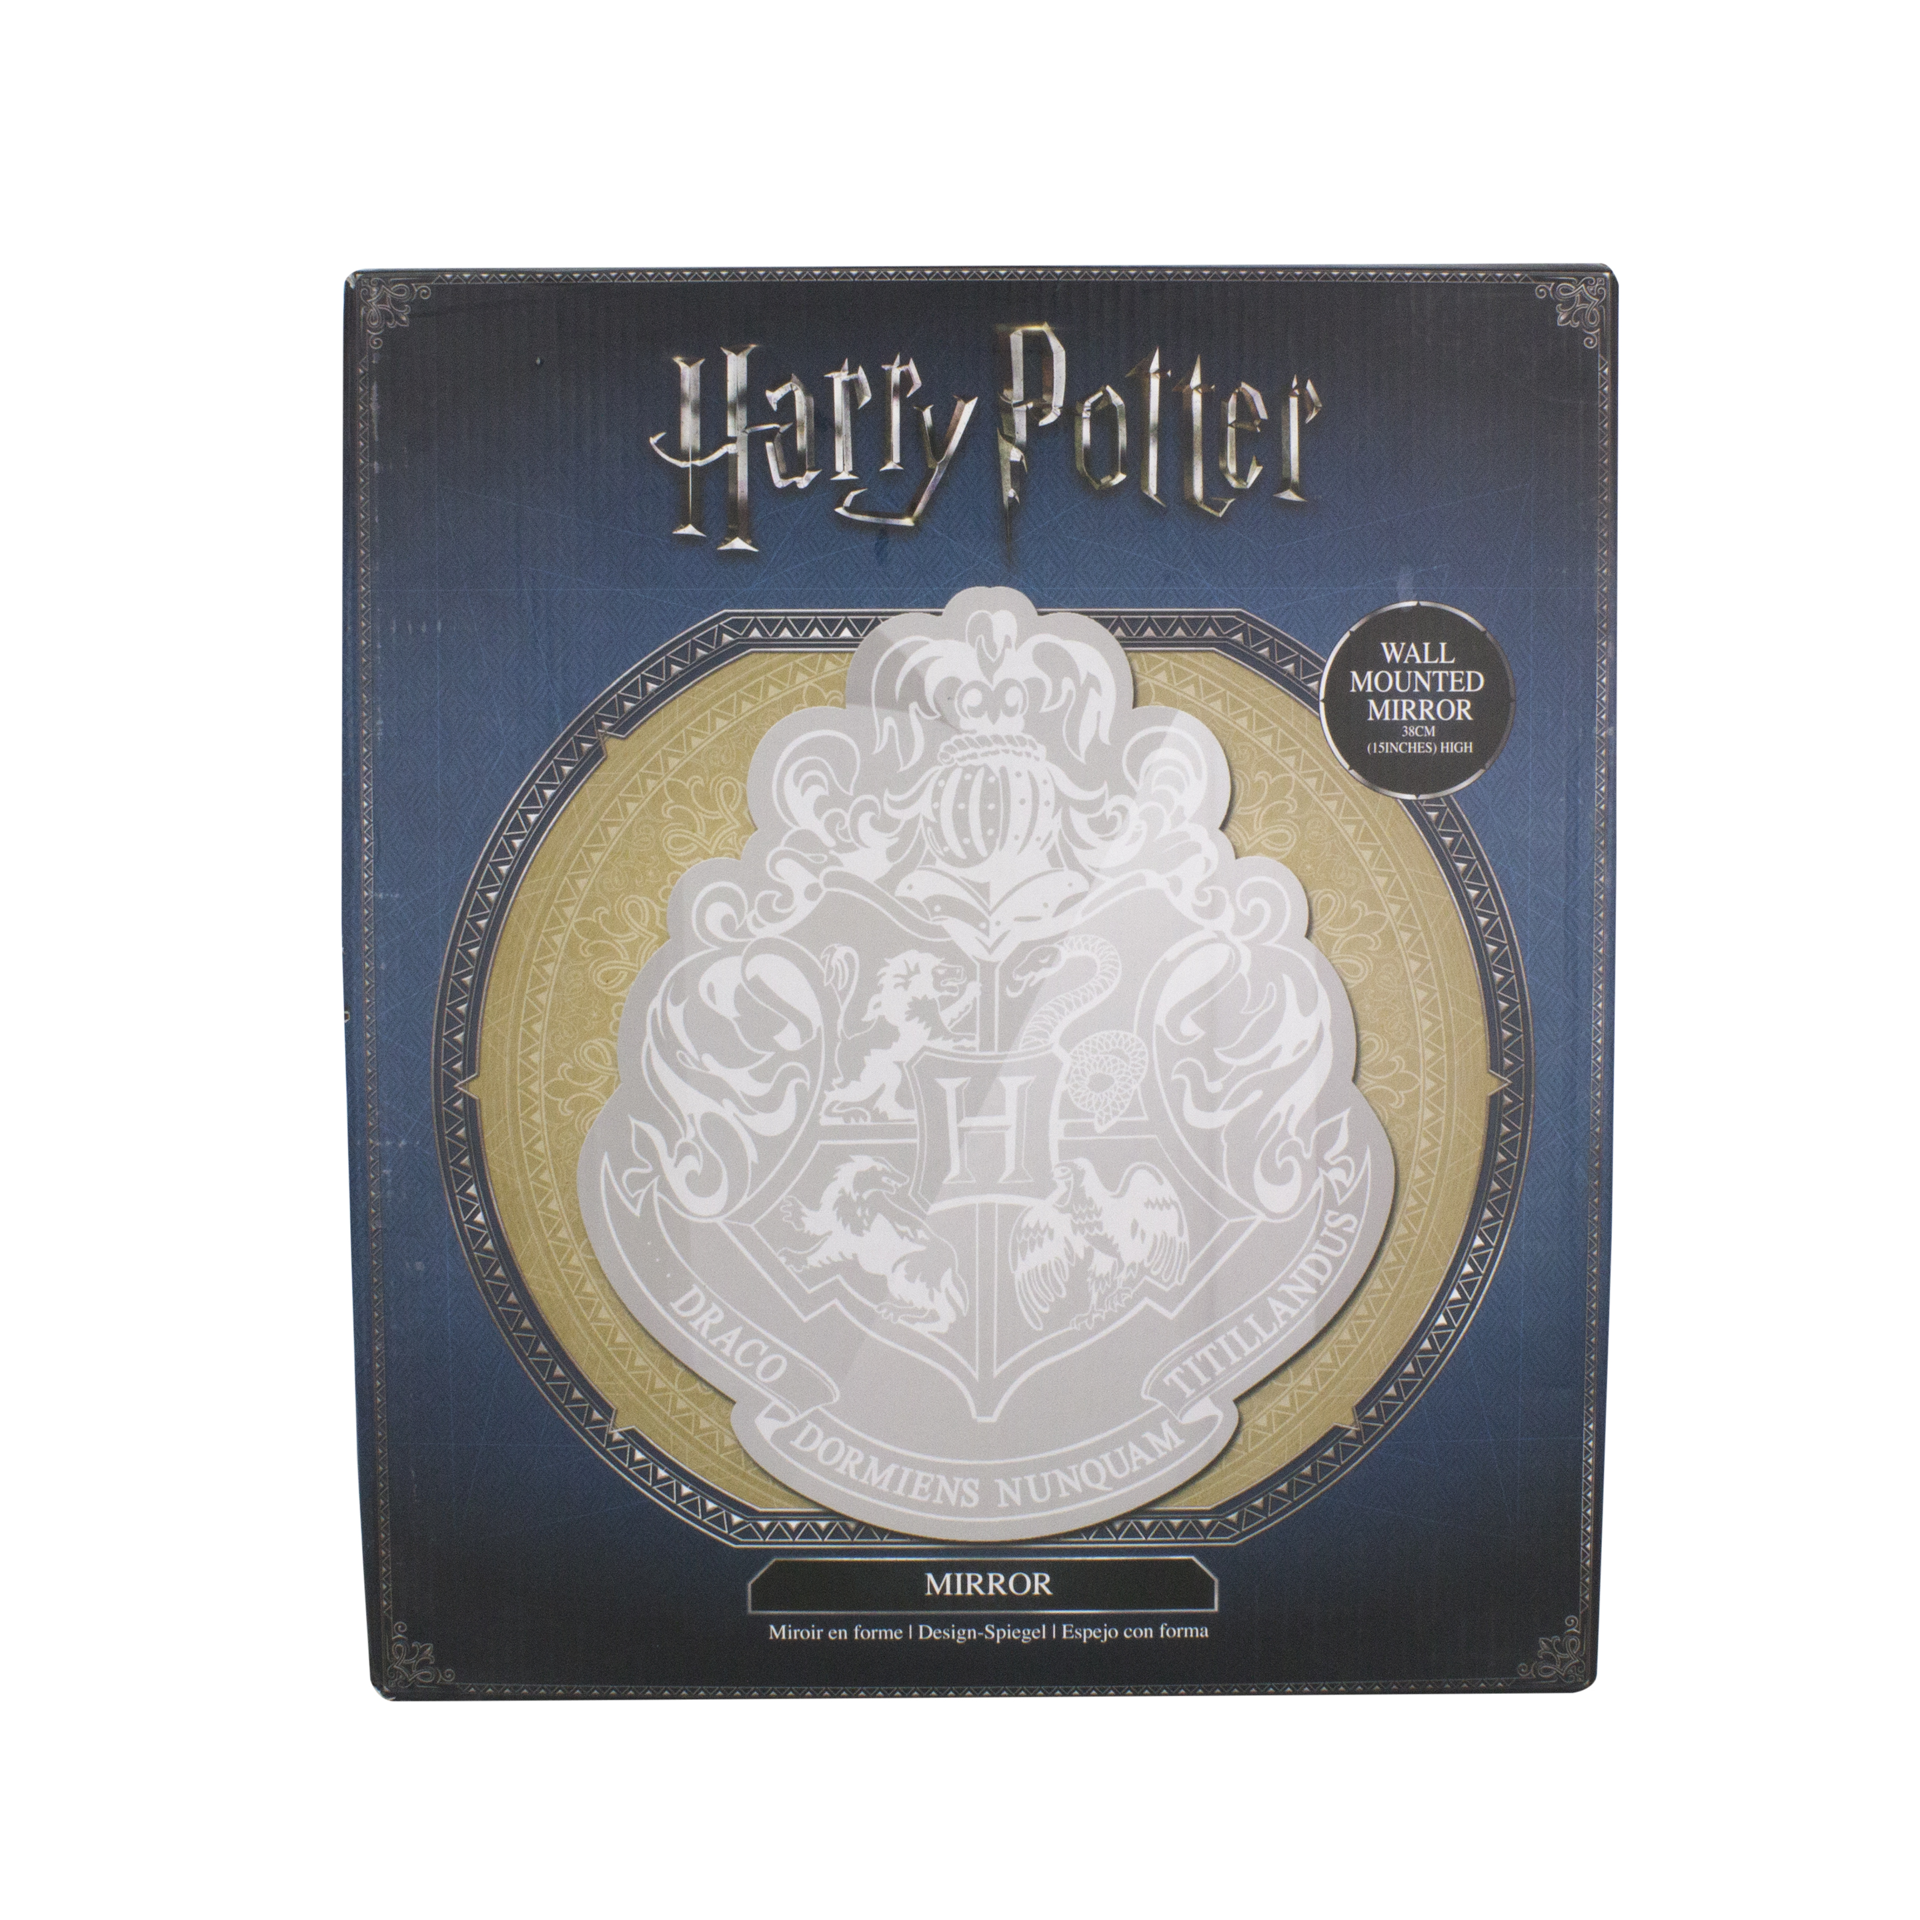 § Harry Potter - Hogwarts Crest Mirror